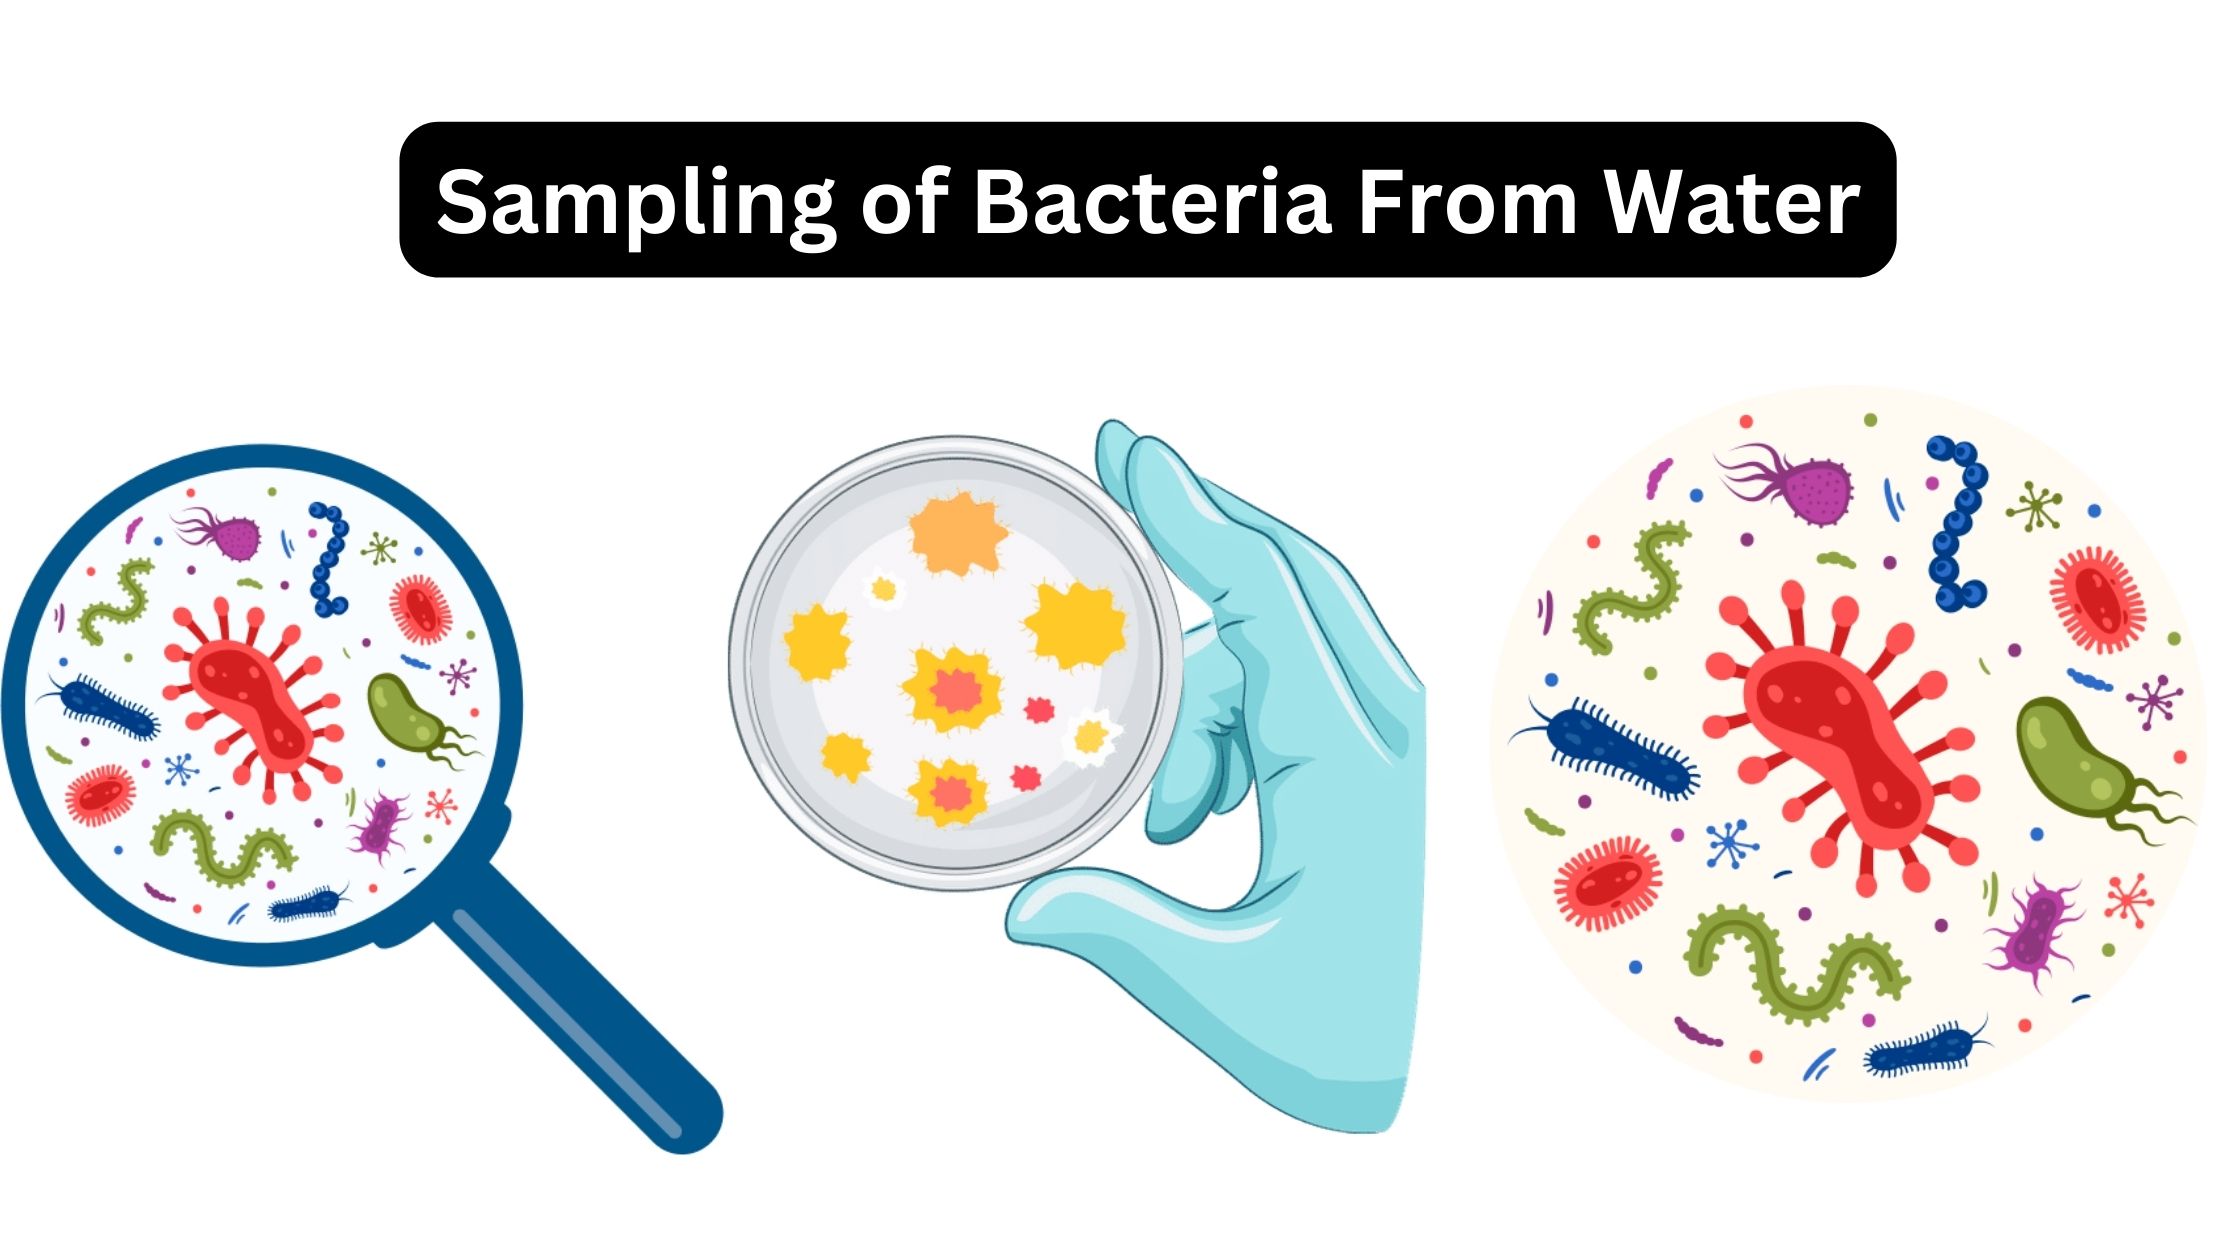 Sampling of Bacteria From Water